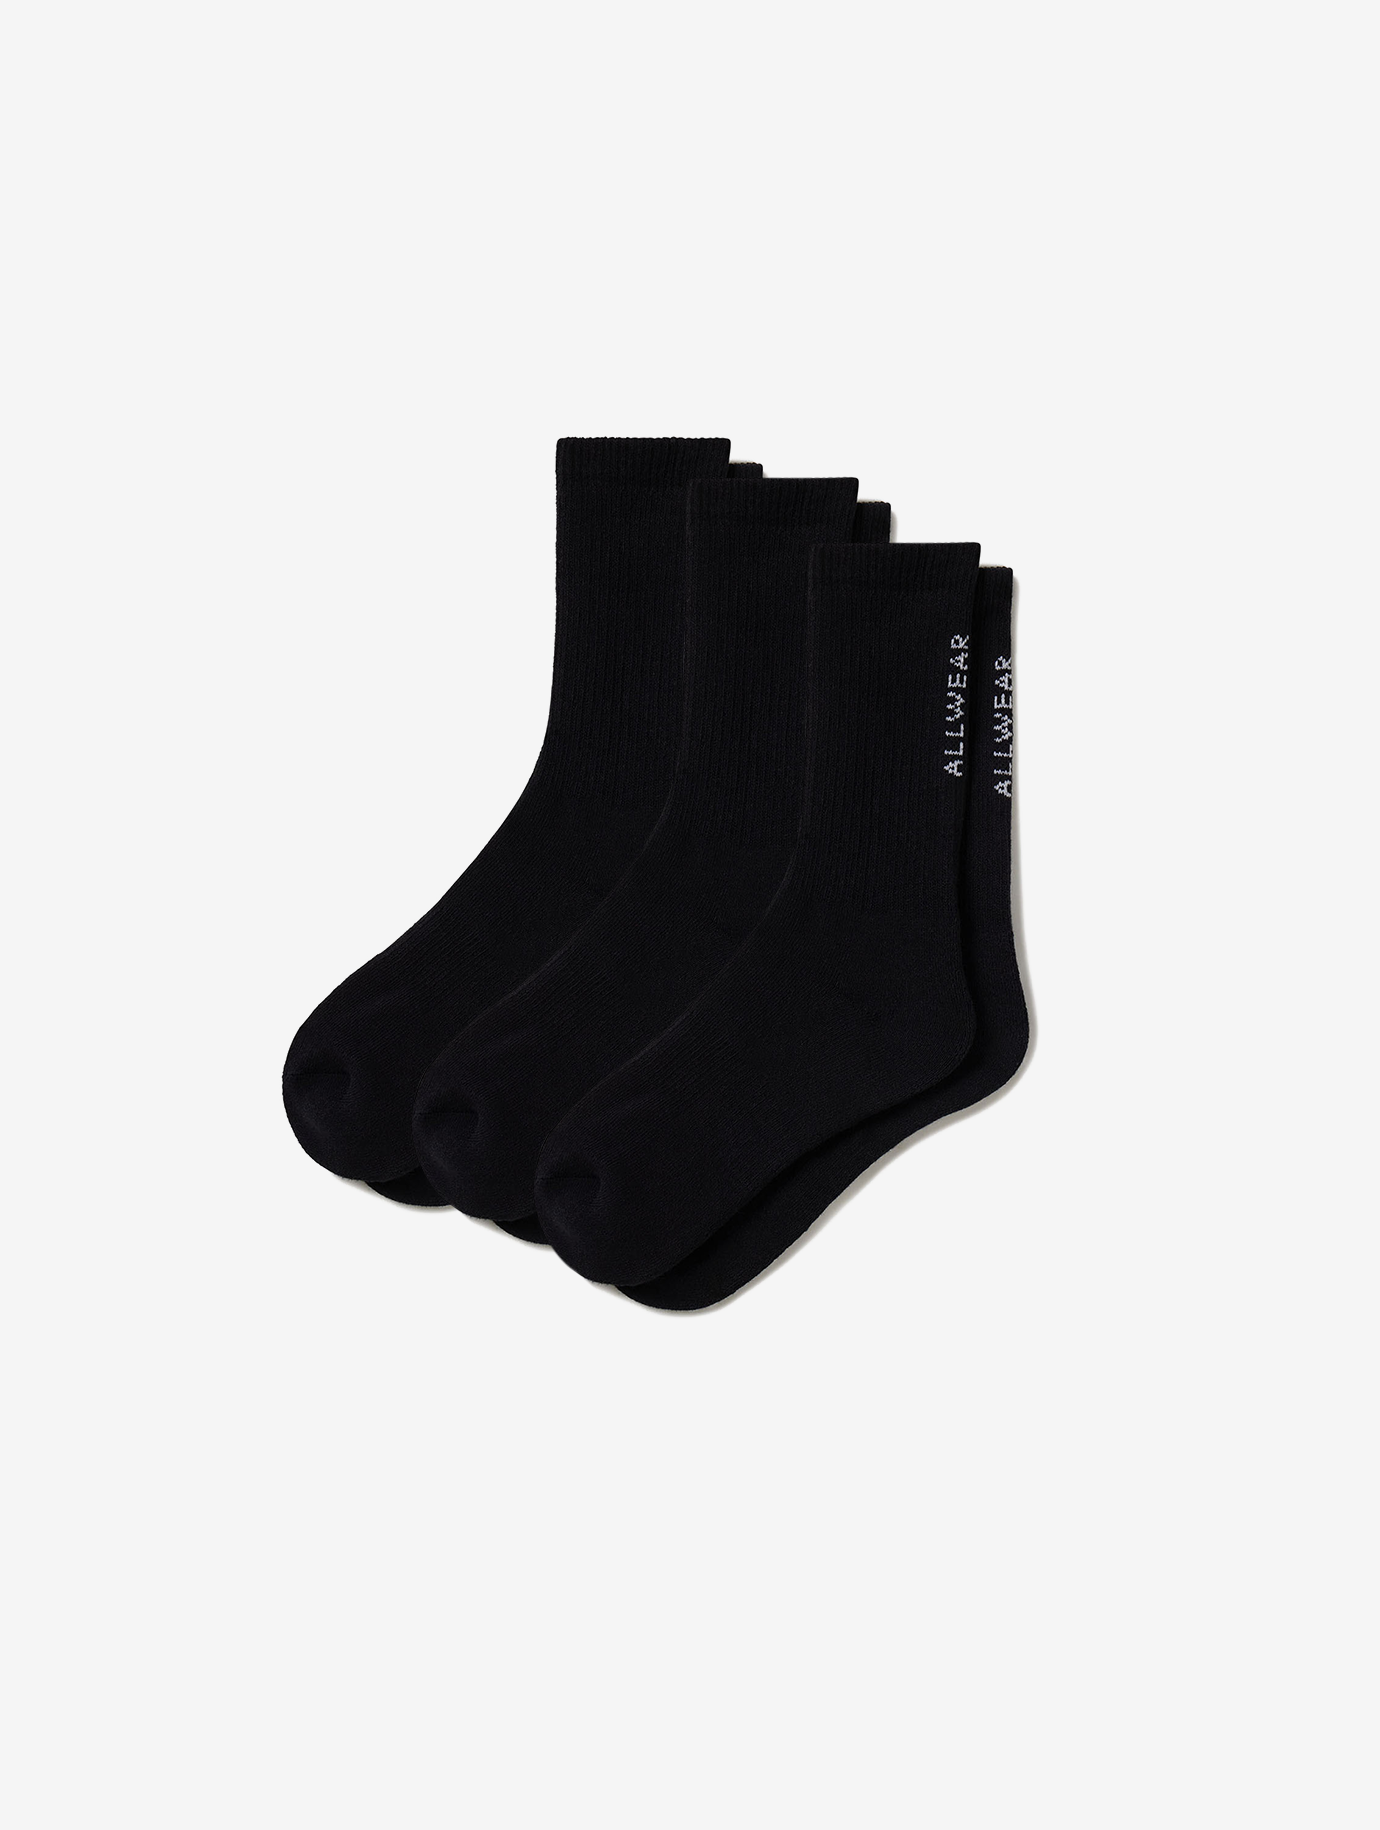 Allwear Organic Crew Socks 3 Pack Bundle